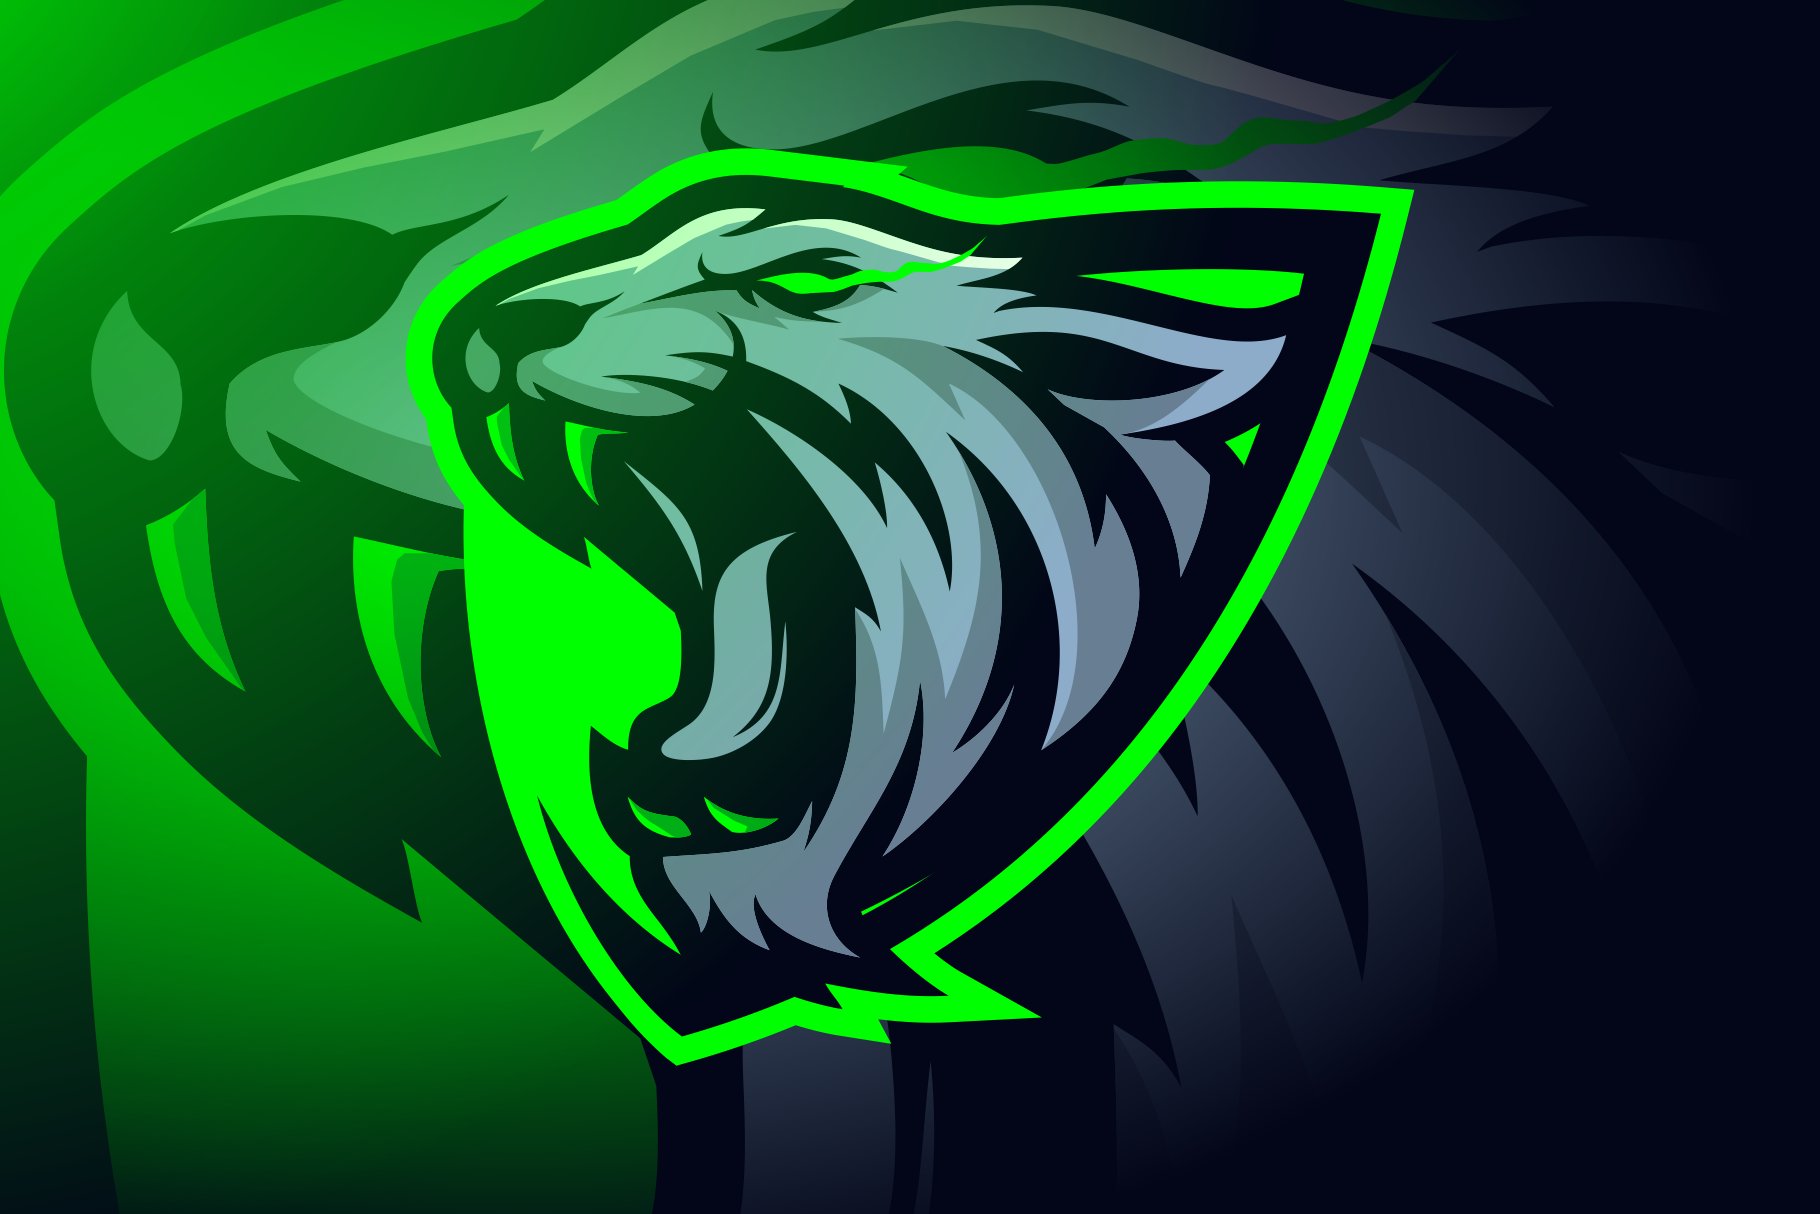 Tiger mascot esport logo cover image.